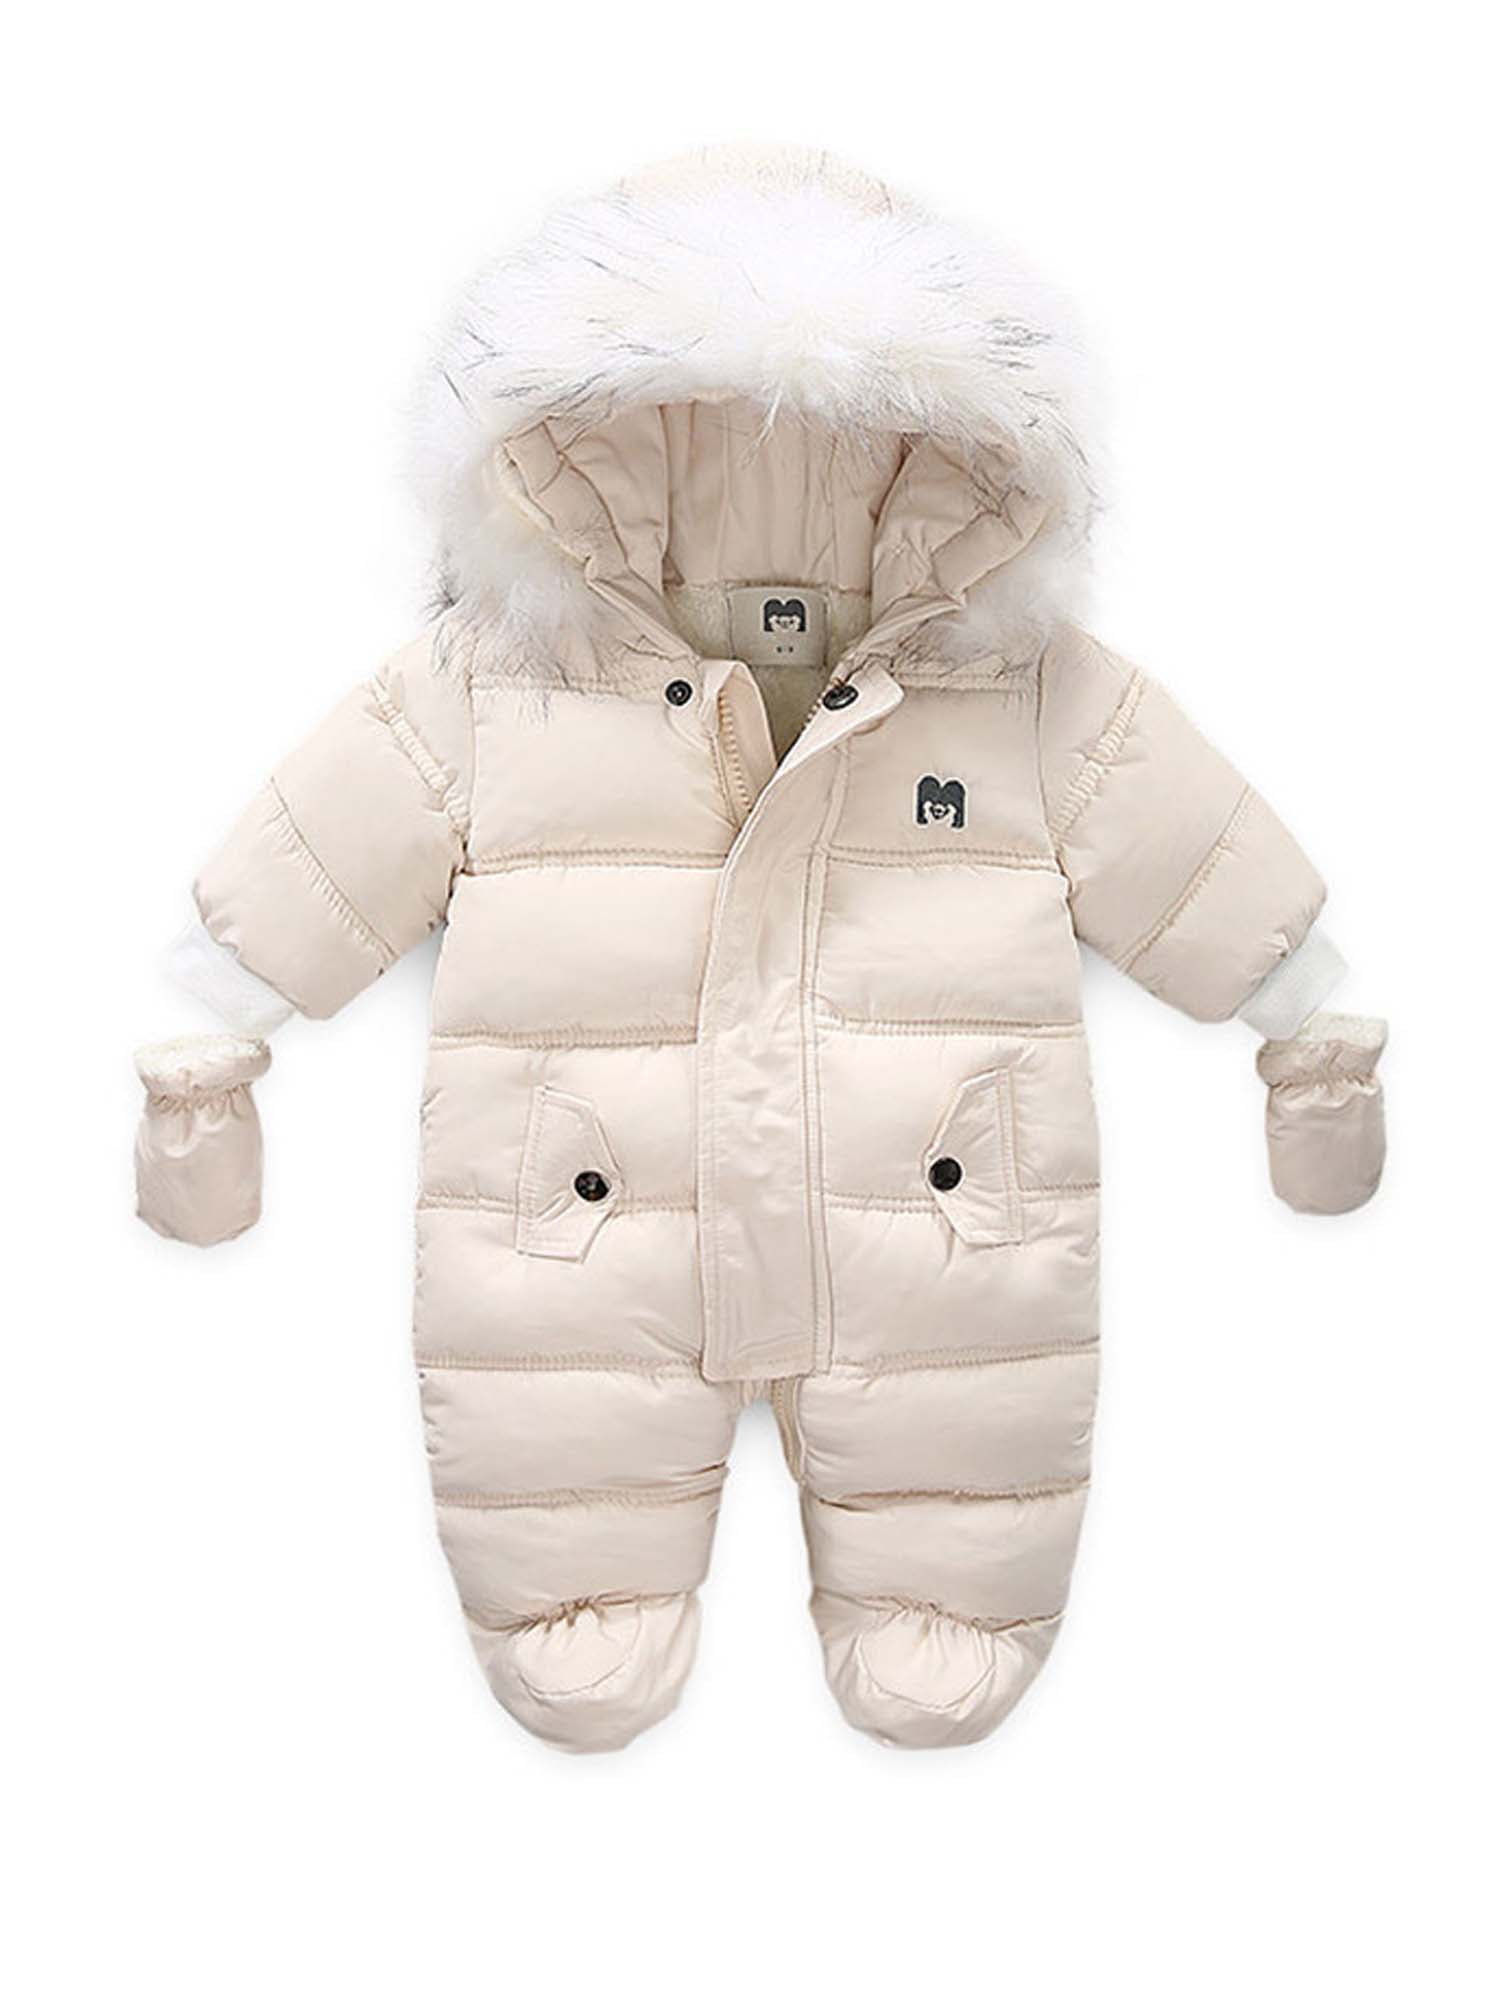 Winter Toddler Infant Baby Boy&Girl Romper Jacket Hooded Jumpsuit Coat Outwear S 